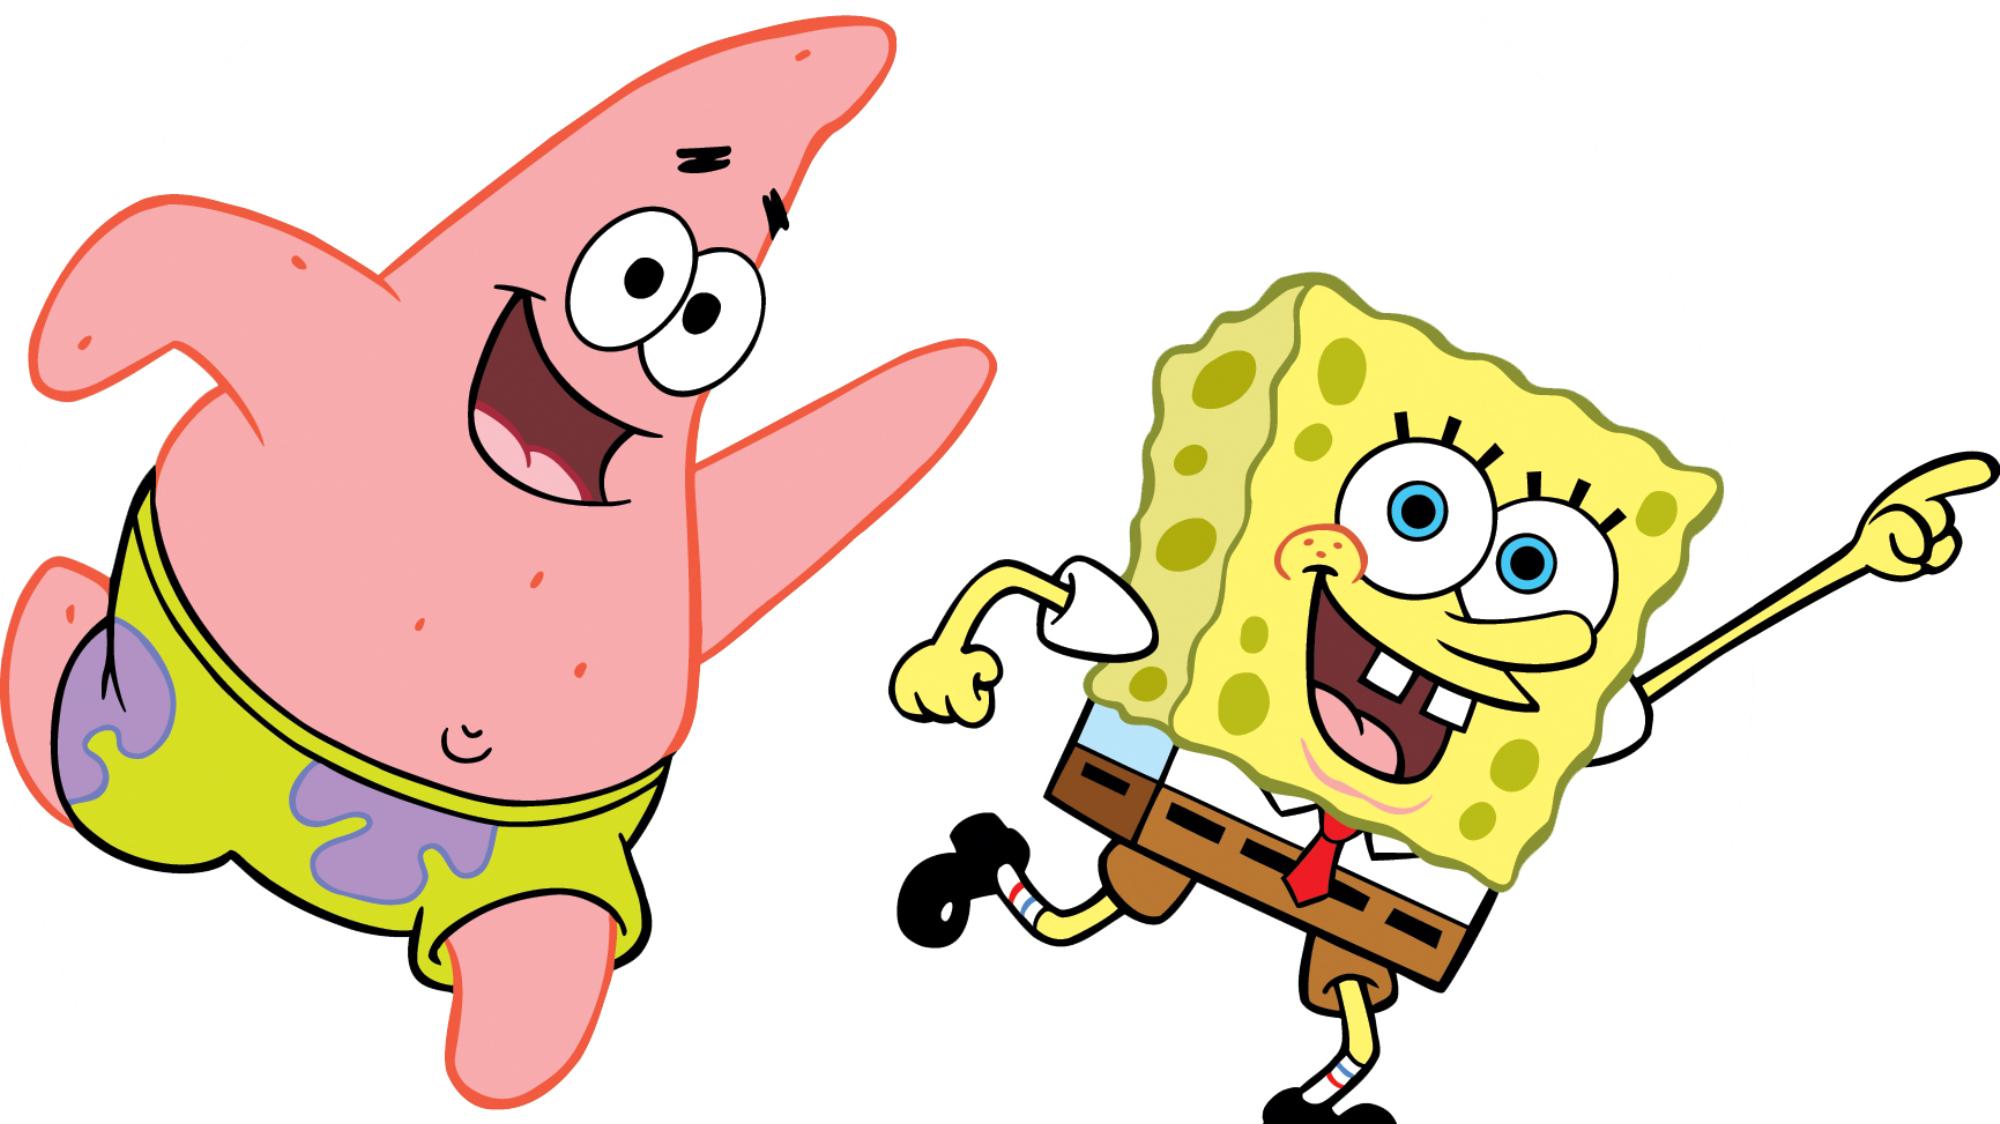 spongebob-and-patrick-patrick-star-spongebob-wallpaper-40617284